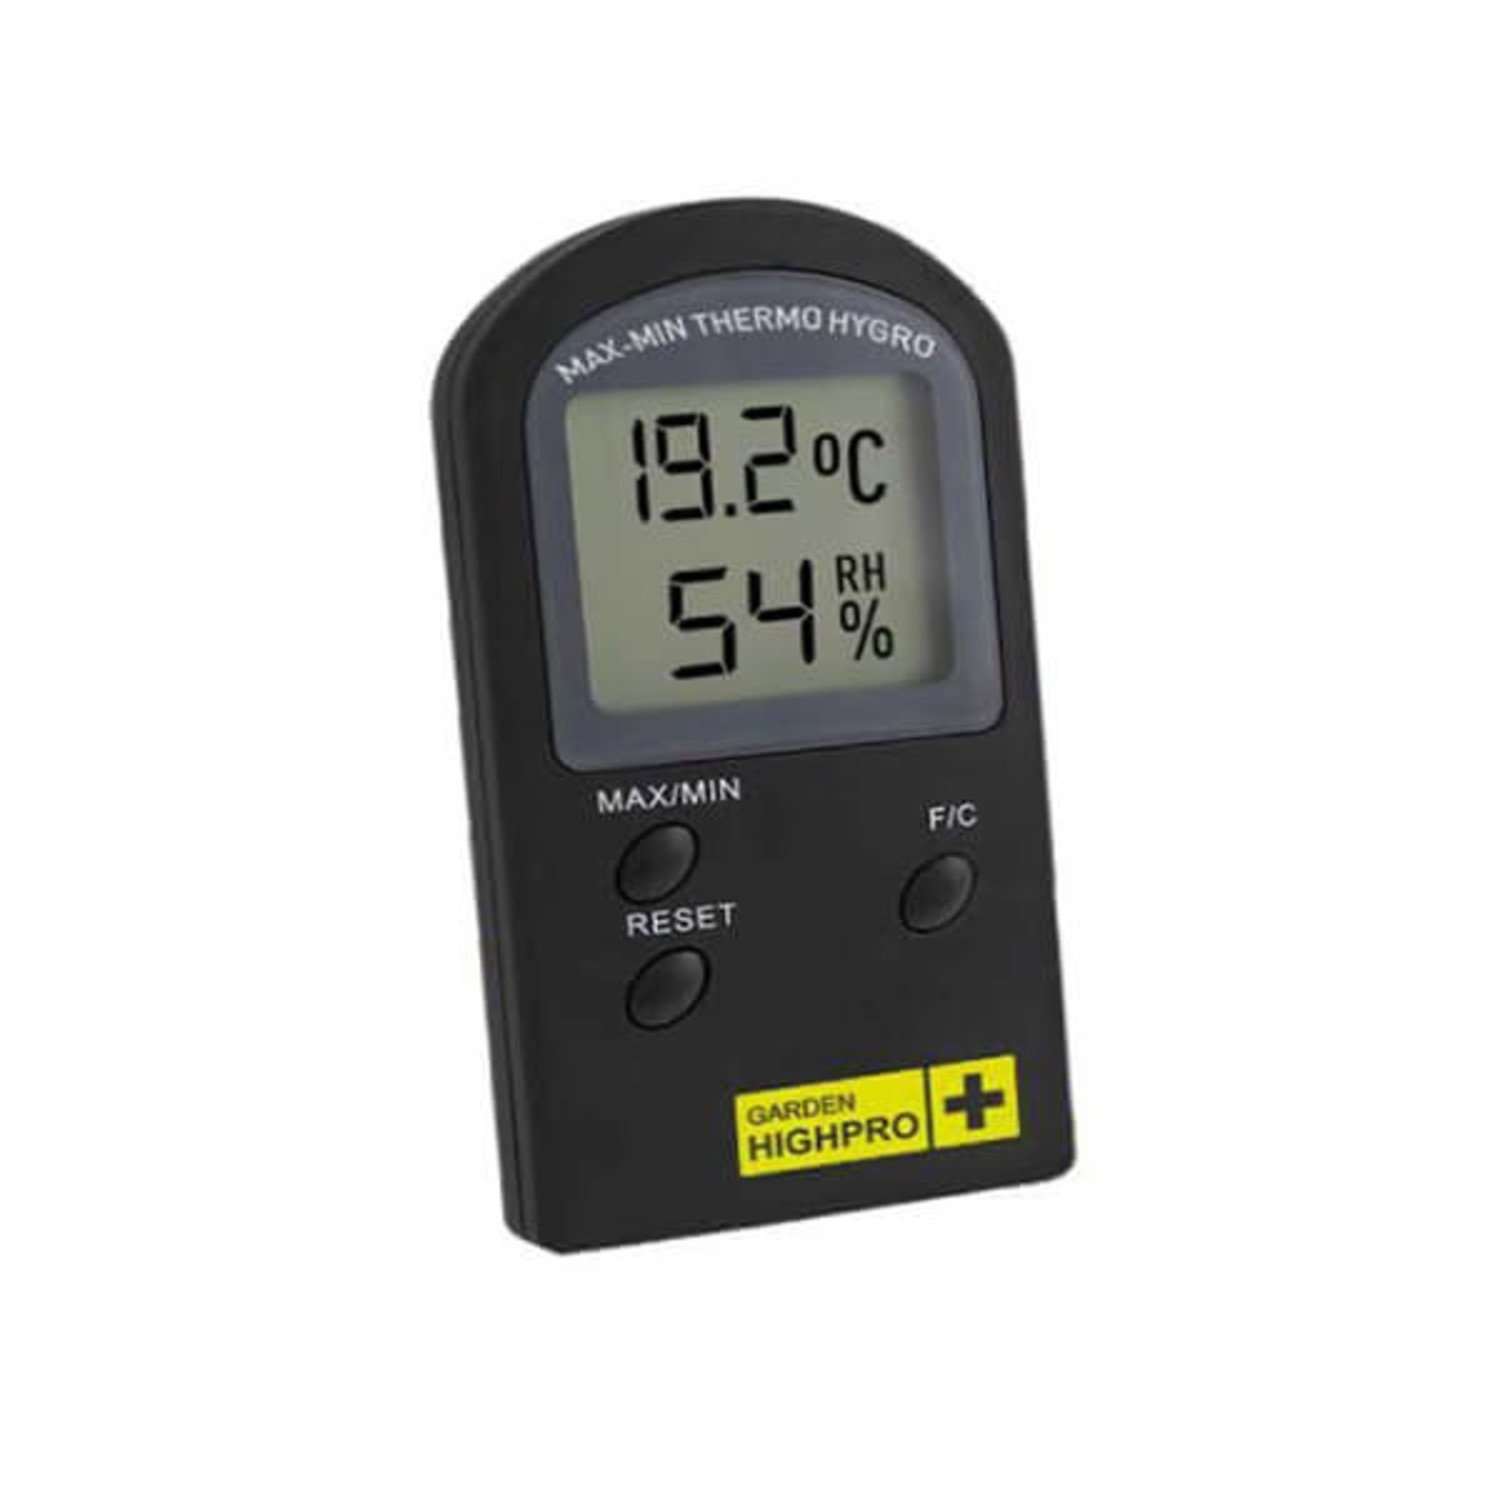 Thermometer, Hygrometer, digital hygrometer, hygro